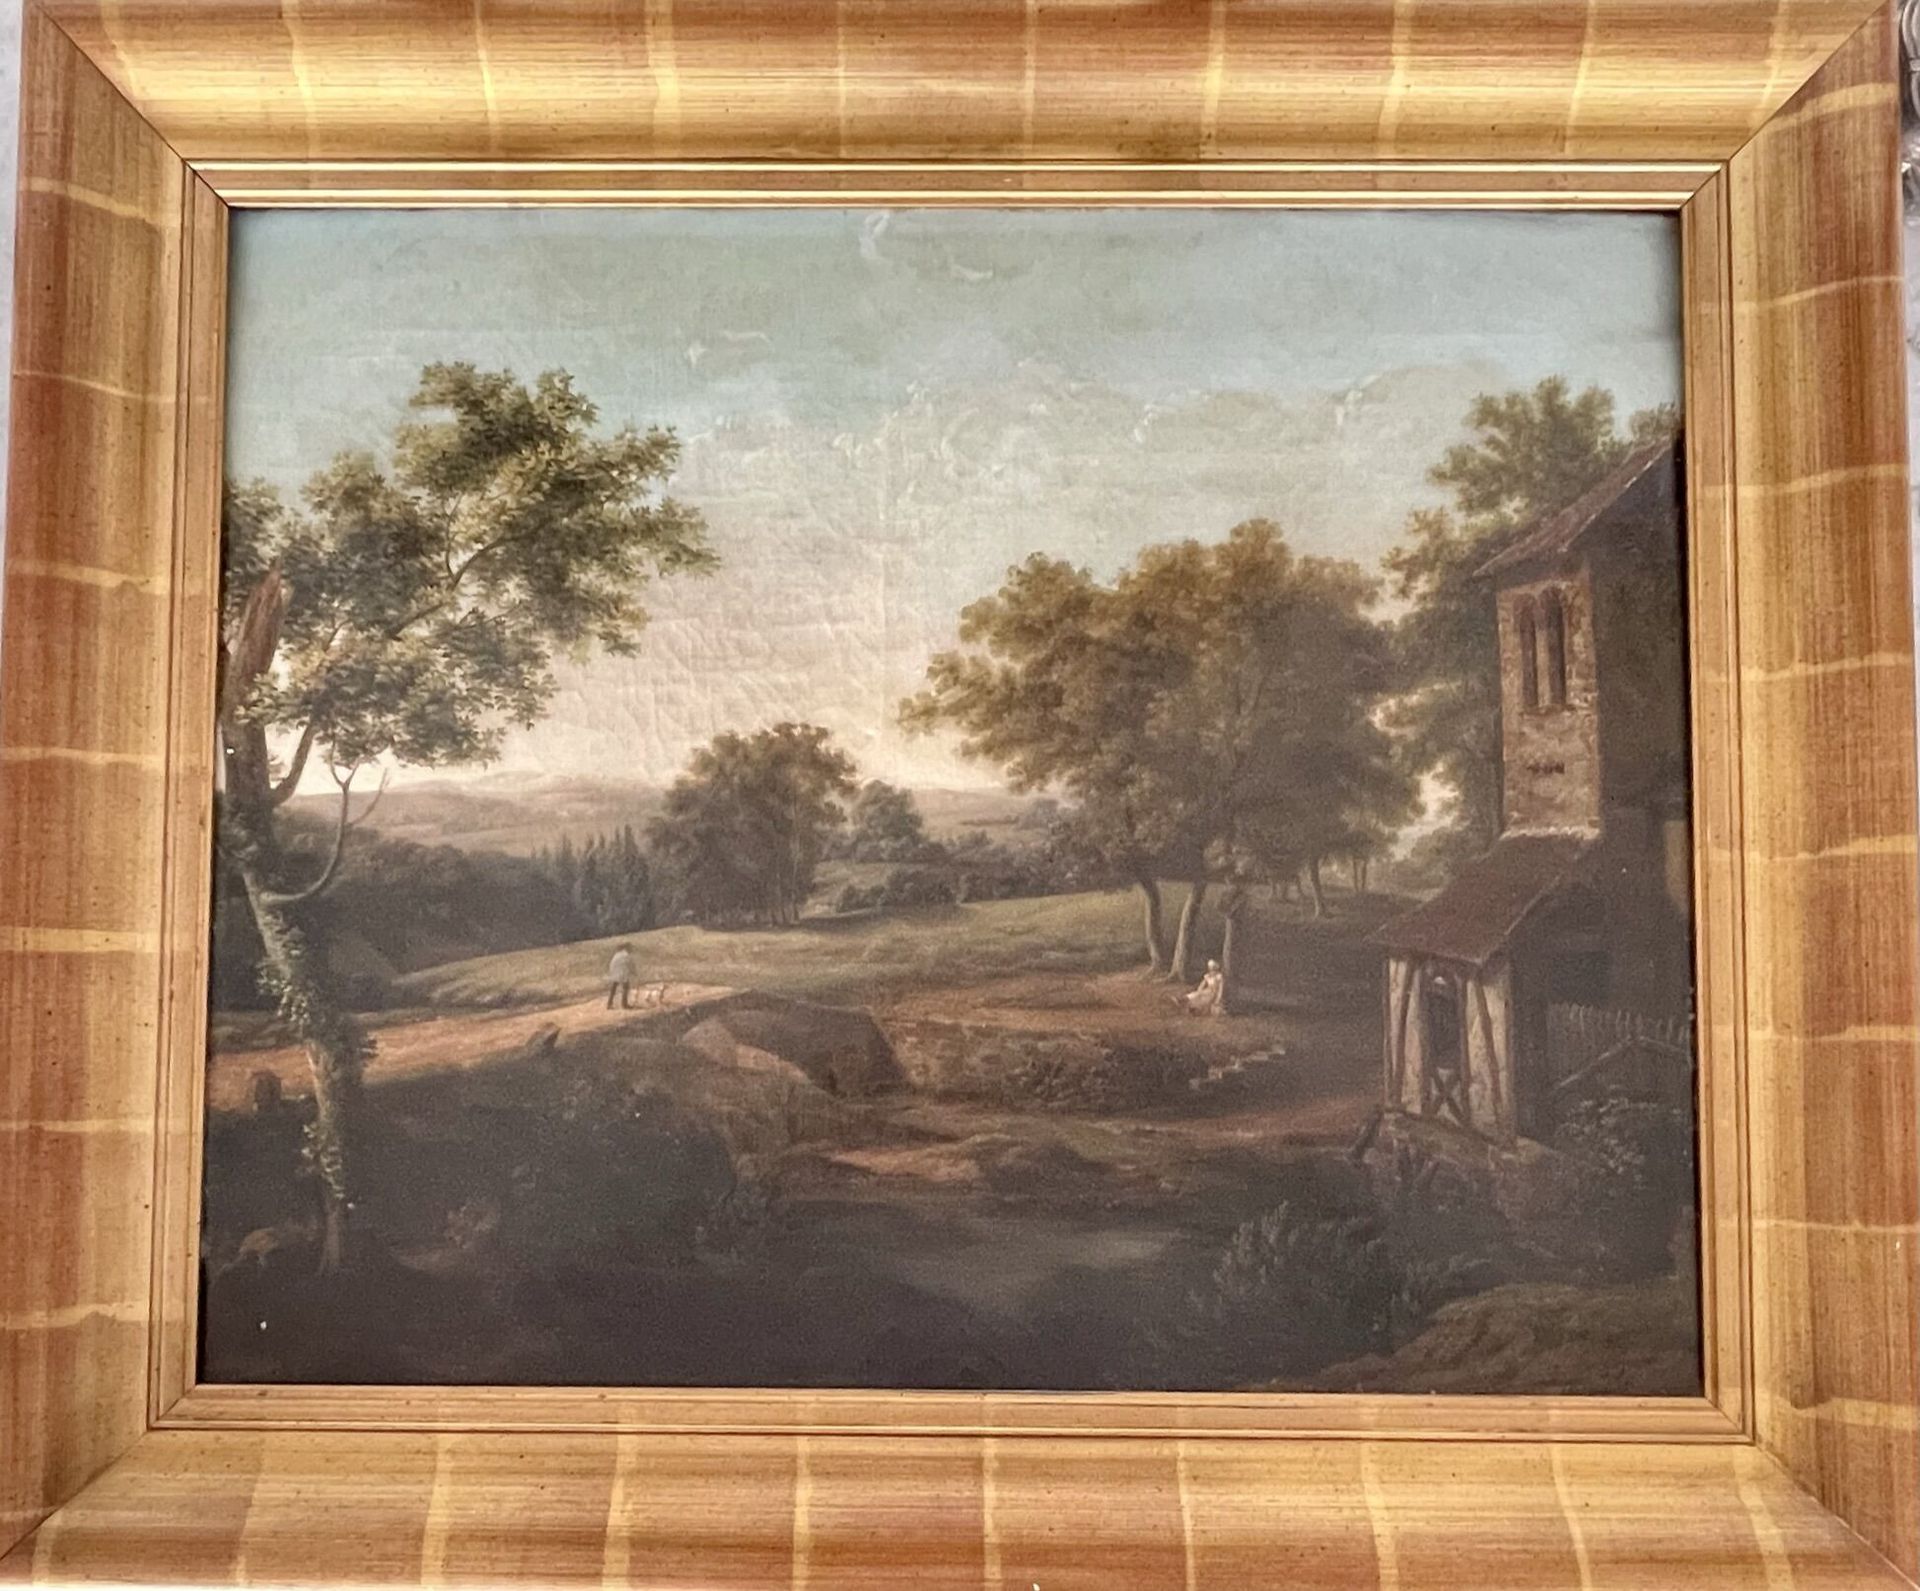 Null 19世纪的法国学校

"农场附近热闹的风景"。

布面油画。

H.49厘米 - 宽61厘米

现代框架。